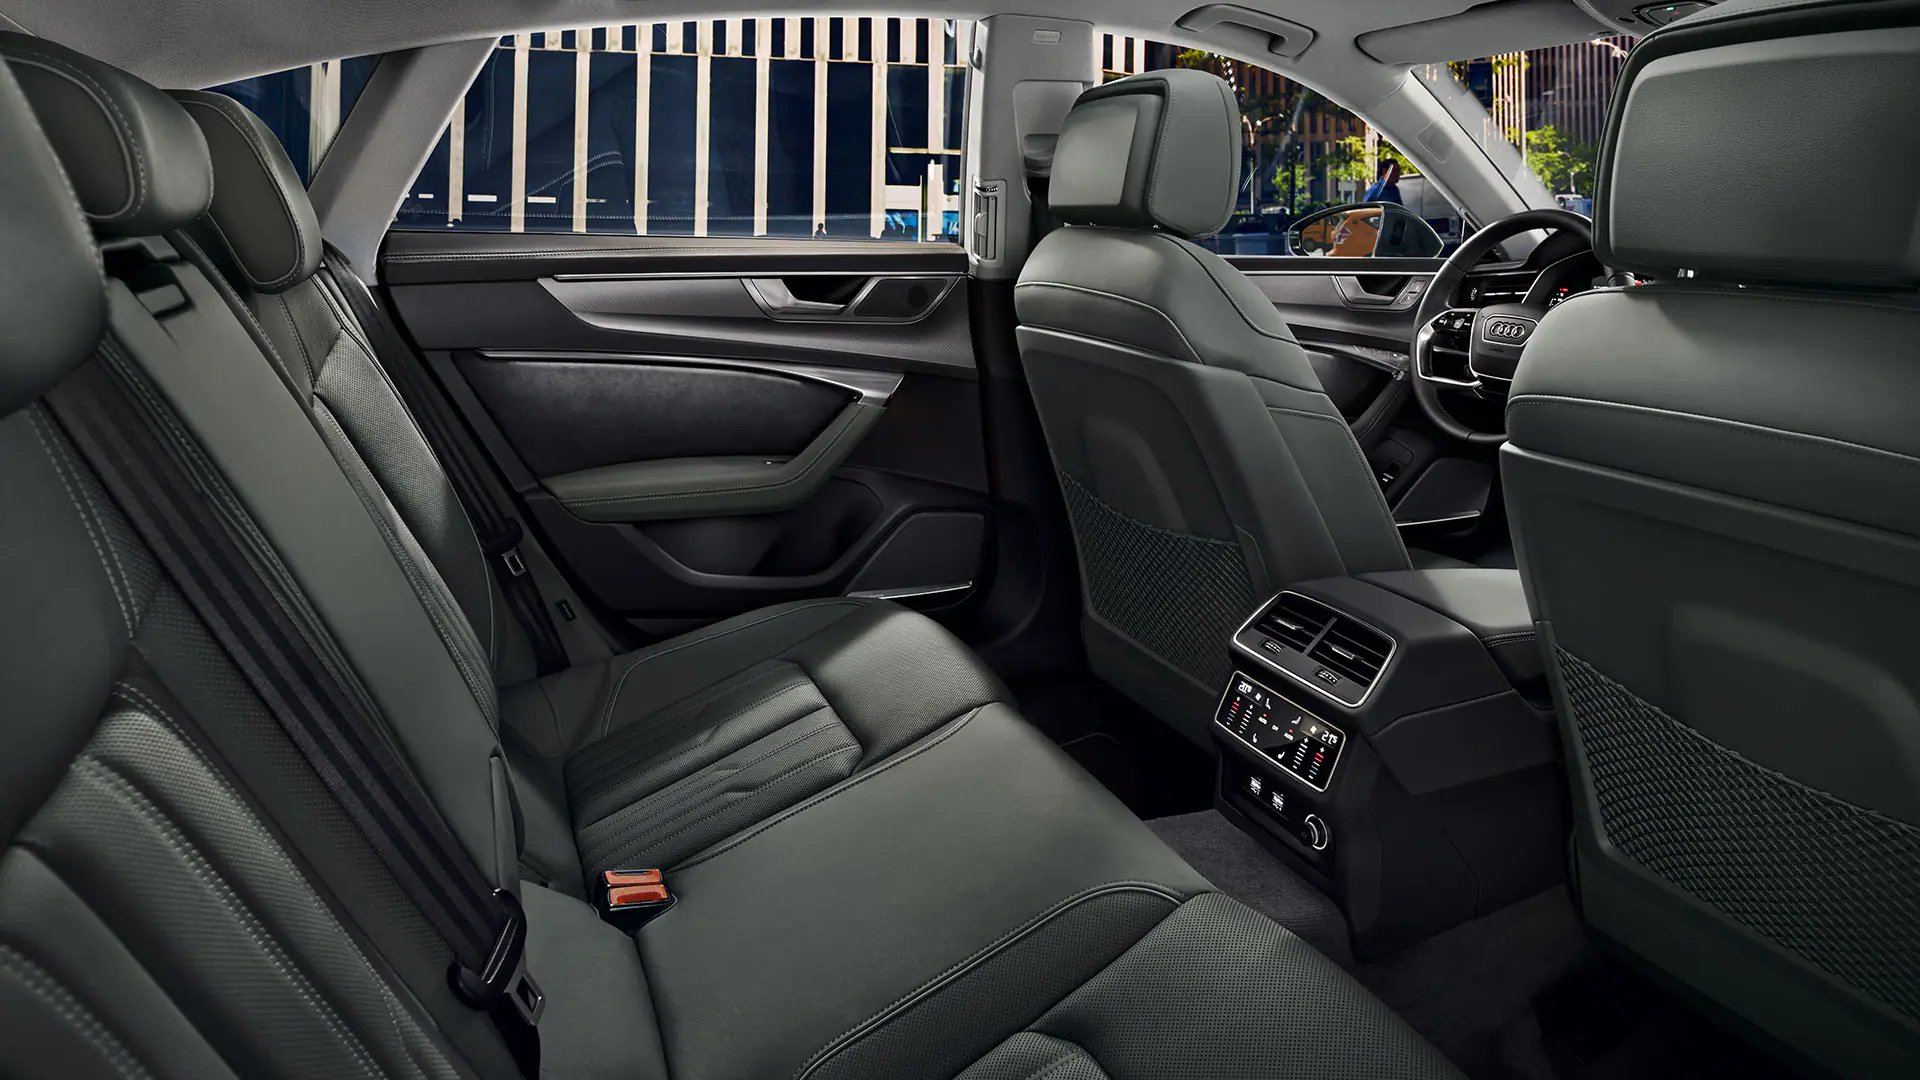 Audi A7 Sportback rear interior seats